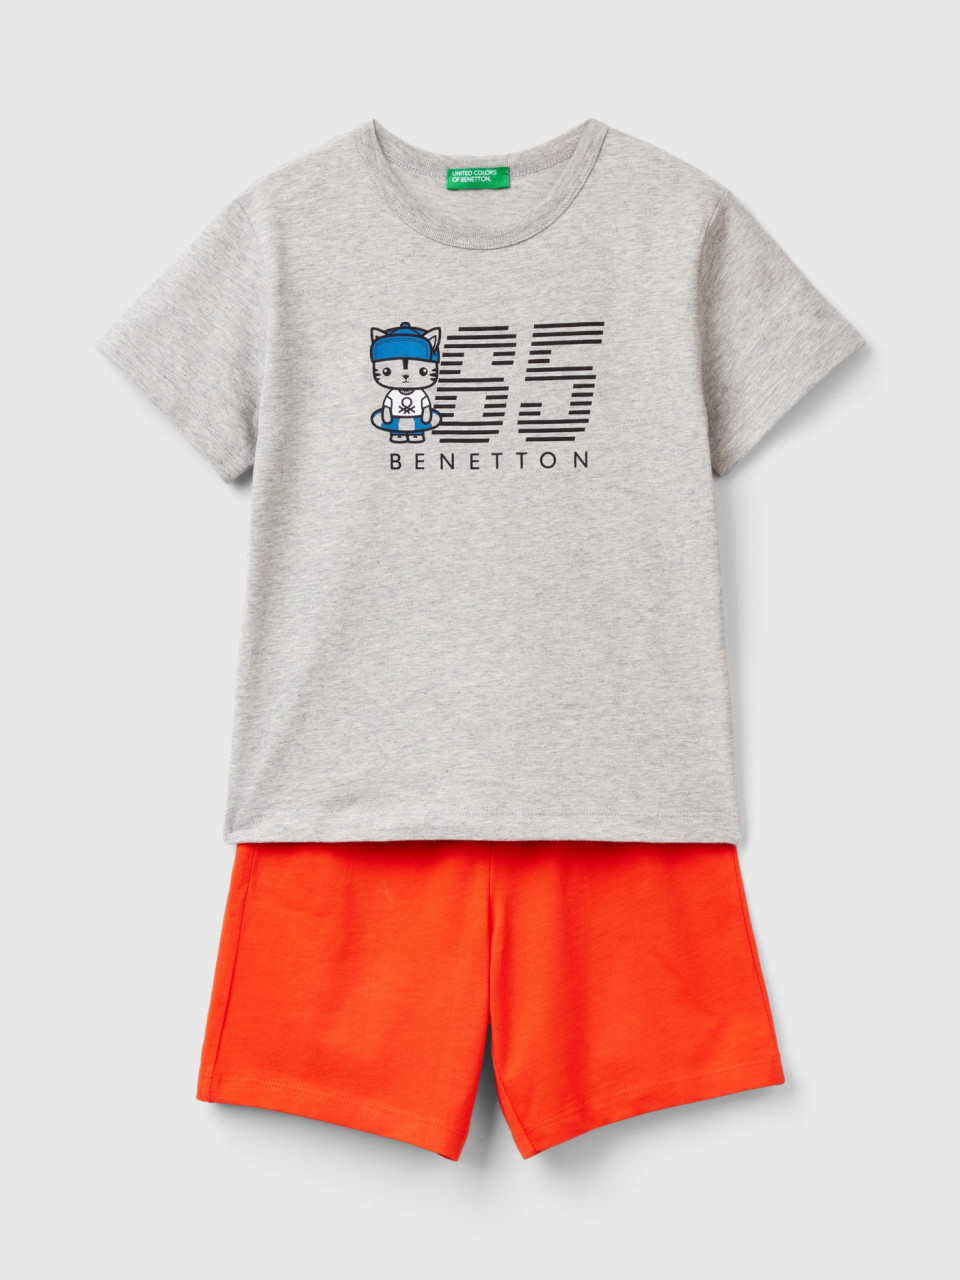 Benetton, 100% Cotton T-shirt And Bermuda Shorts Set, Light Gray, Kids